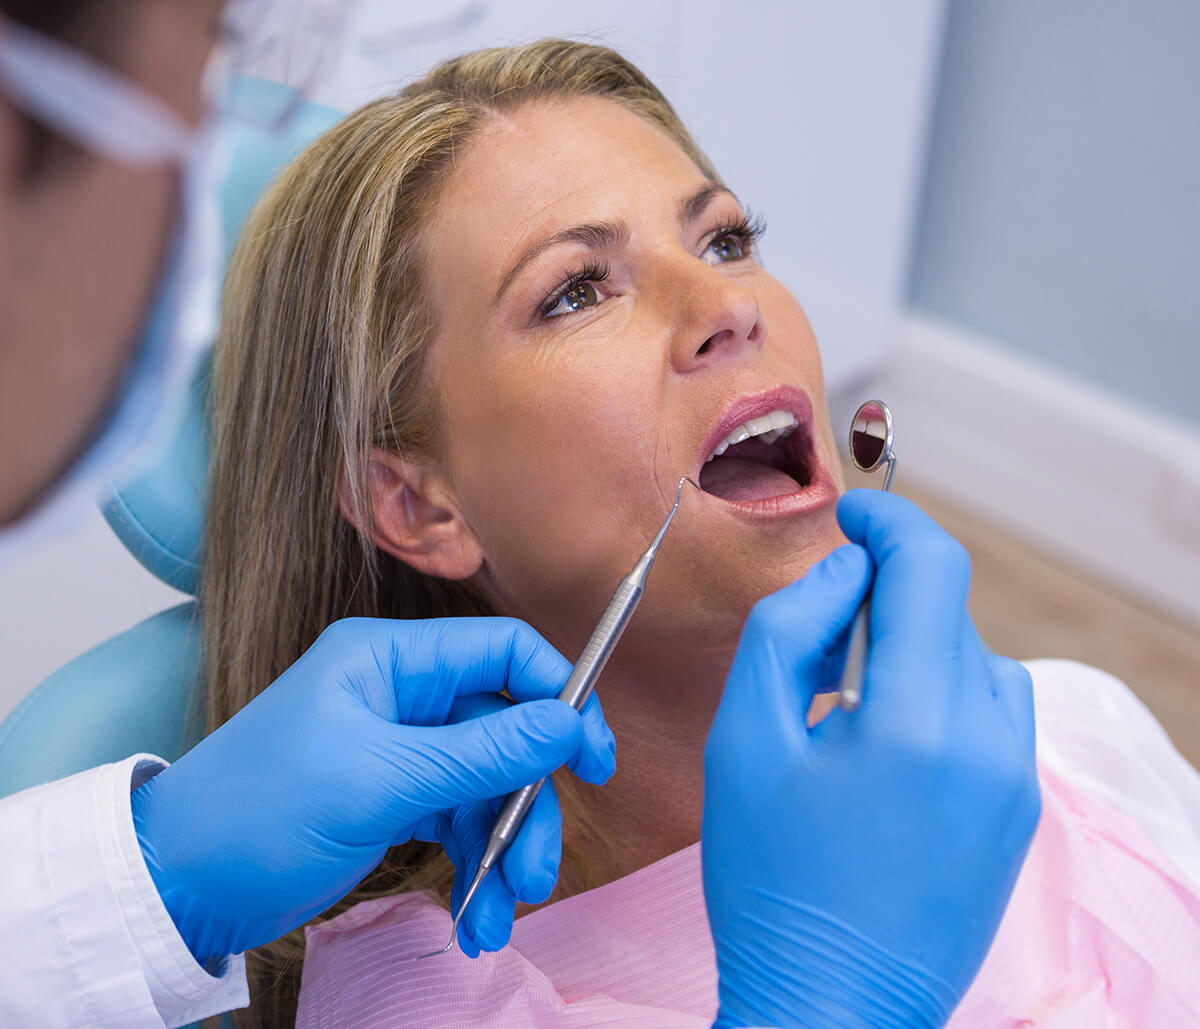 Dentist for Gum Disease in Houston TX Area